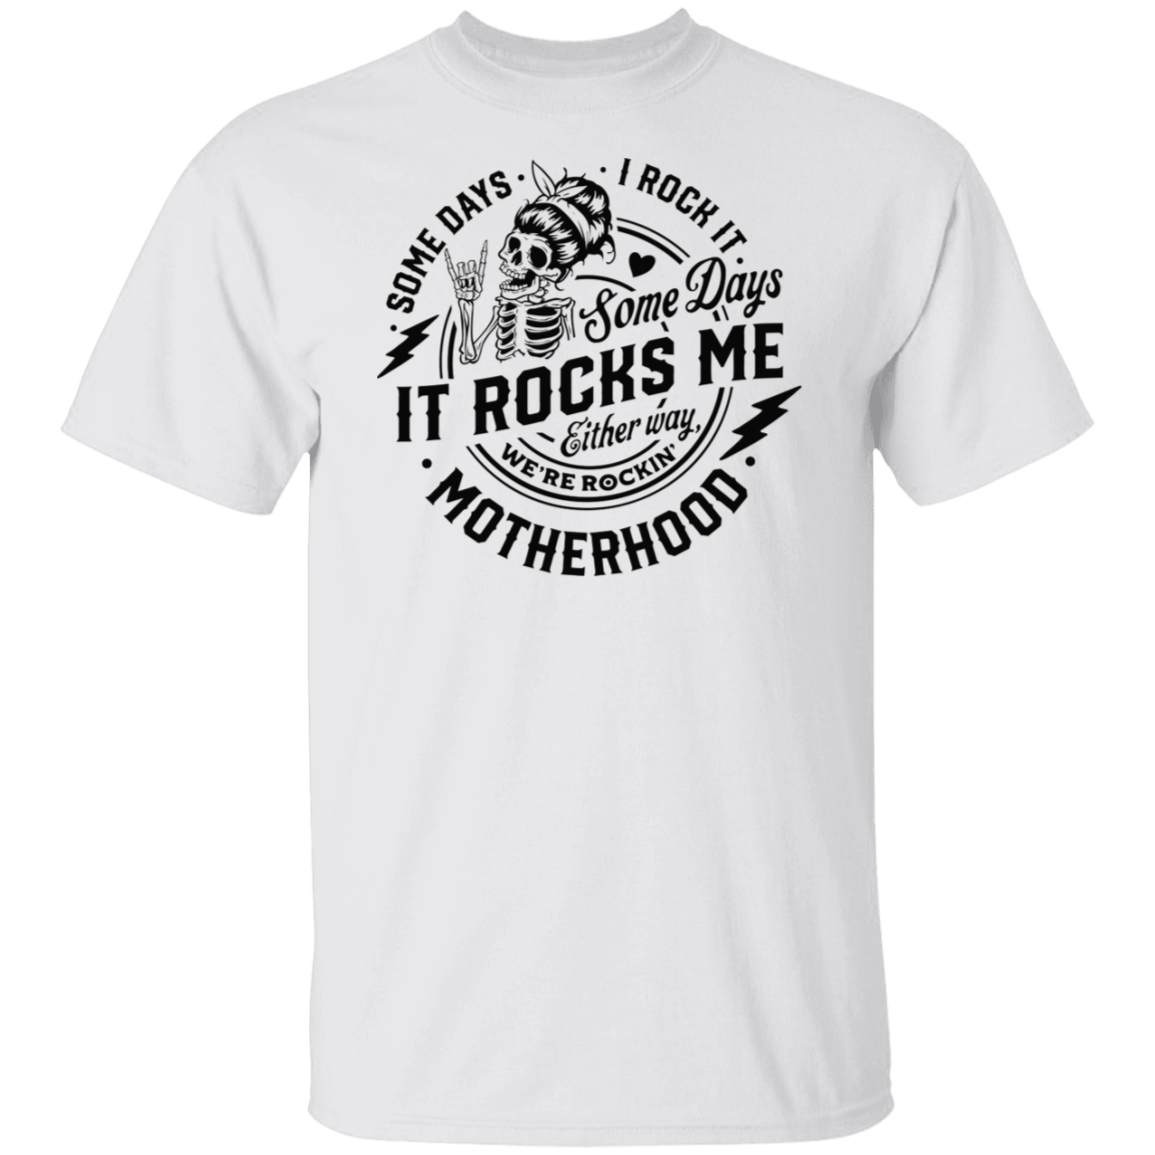 Some Days I Rock It Motherhood Black Print T-Shirt